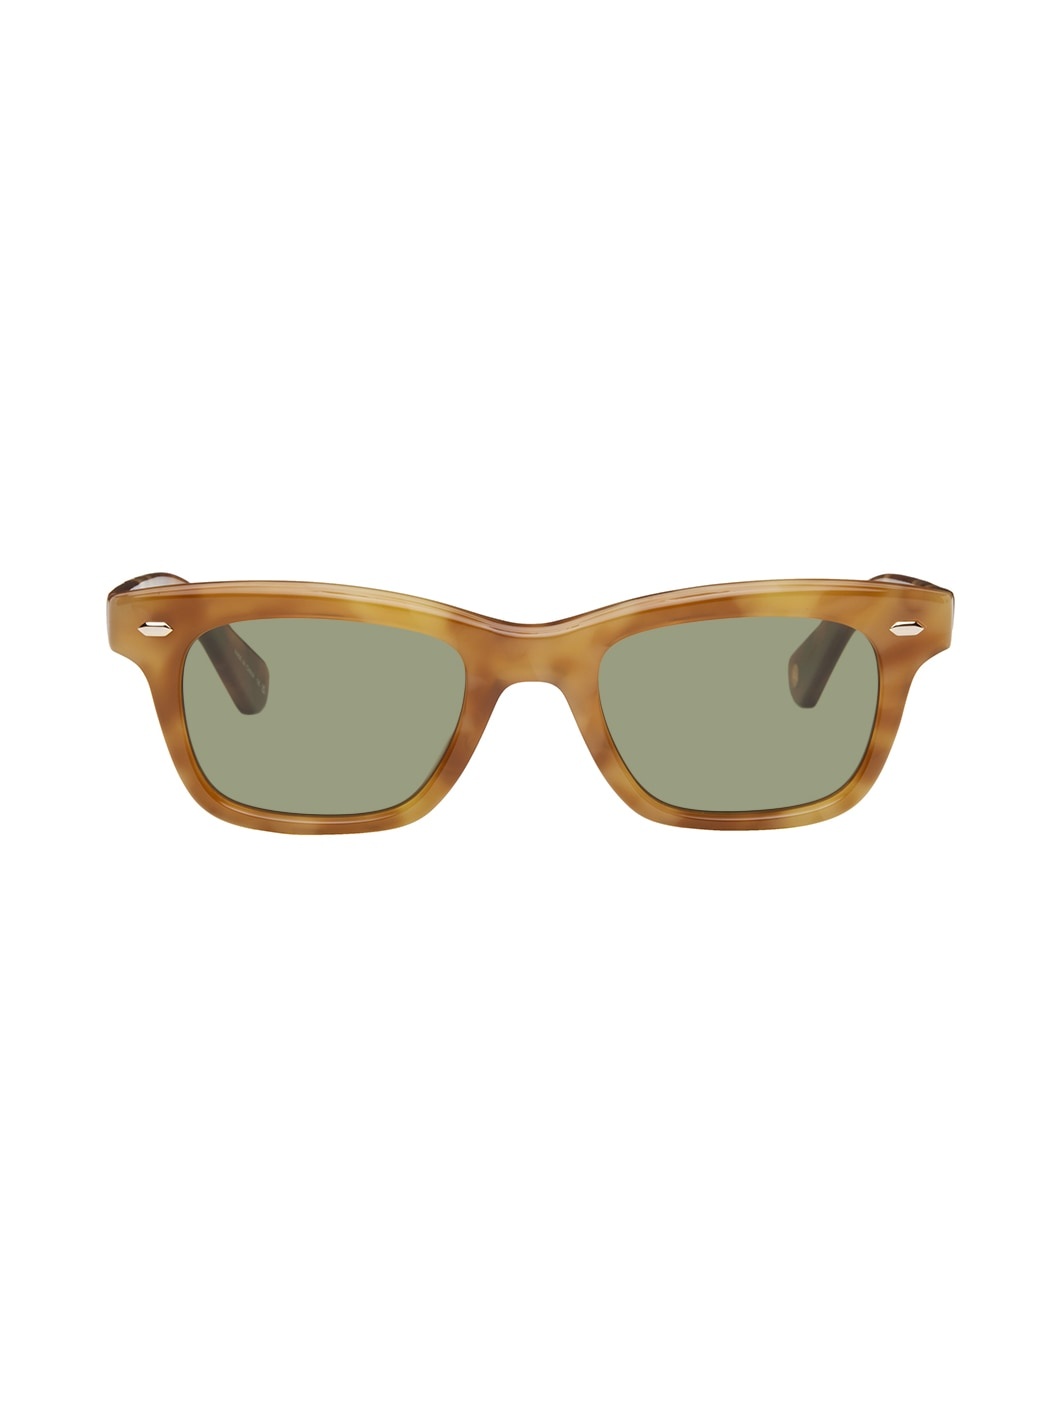 Brown Grove Sunglasses - 1